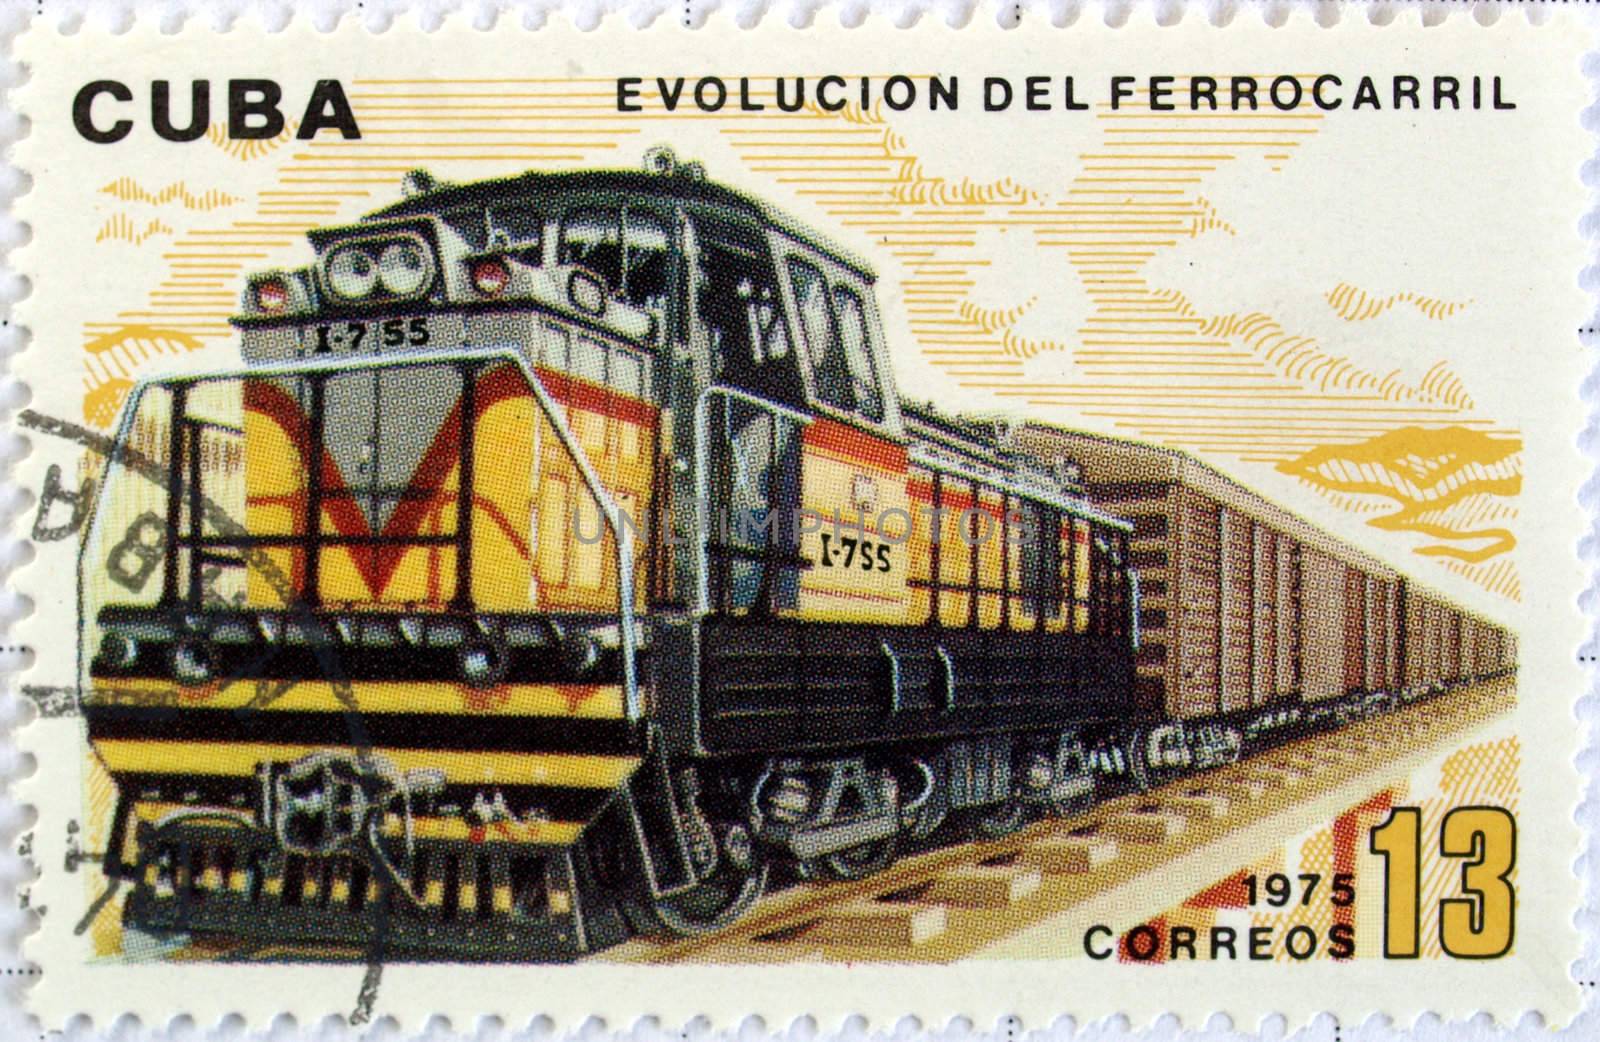 Range of Cuba postage stamps